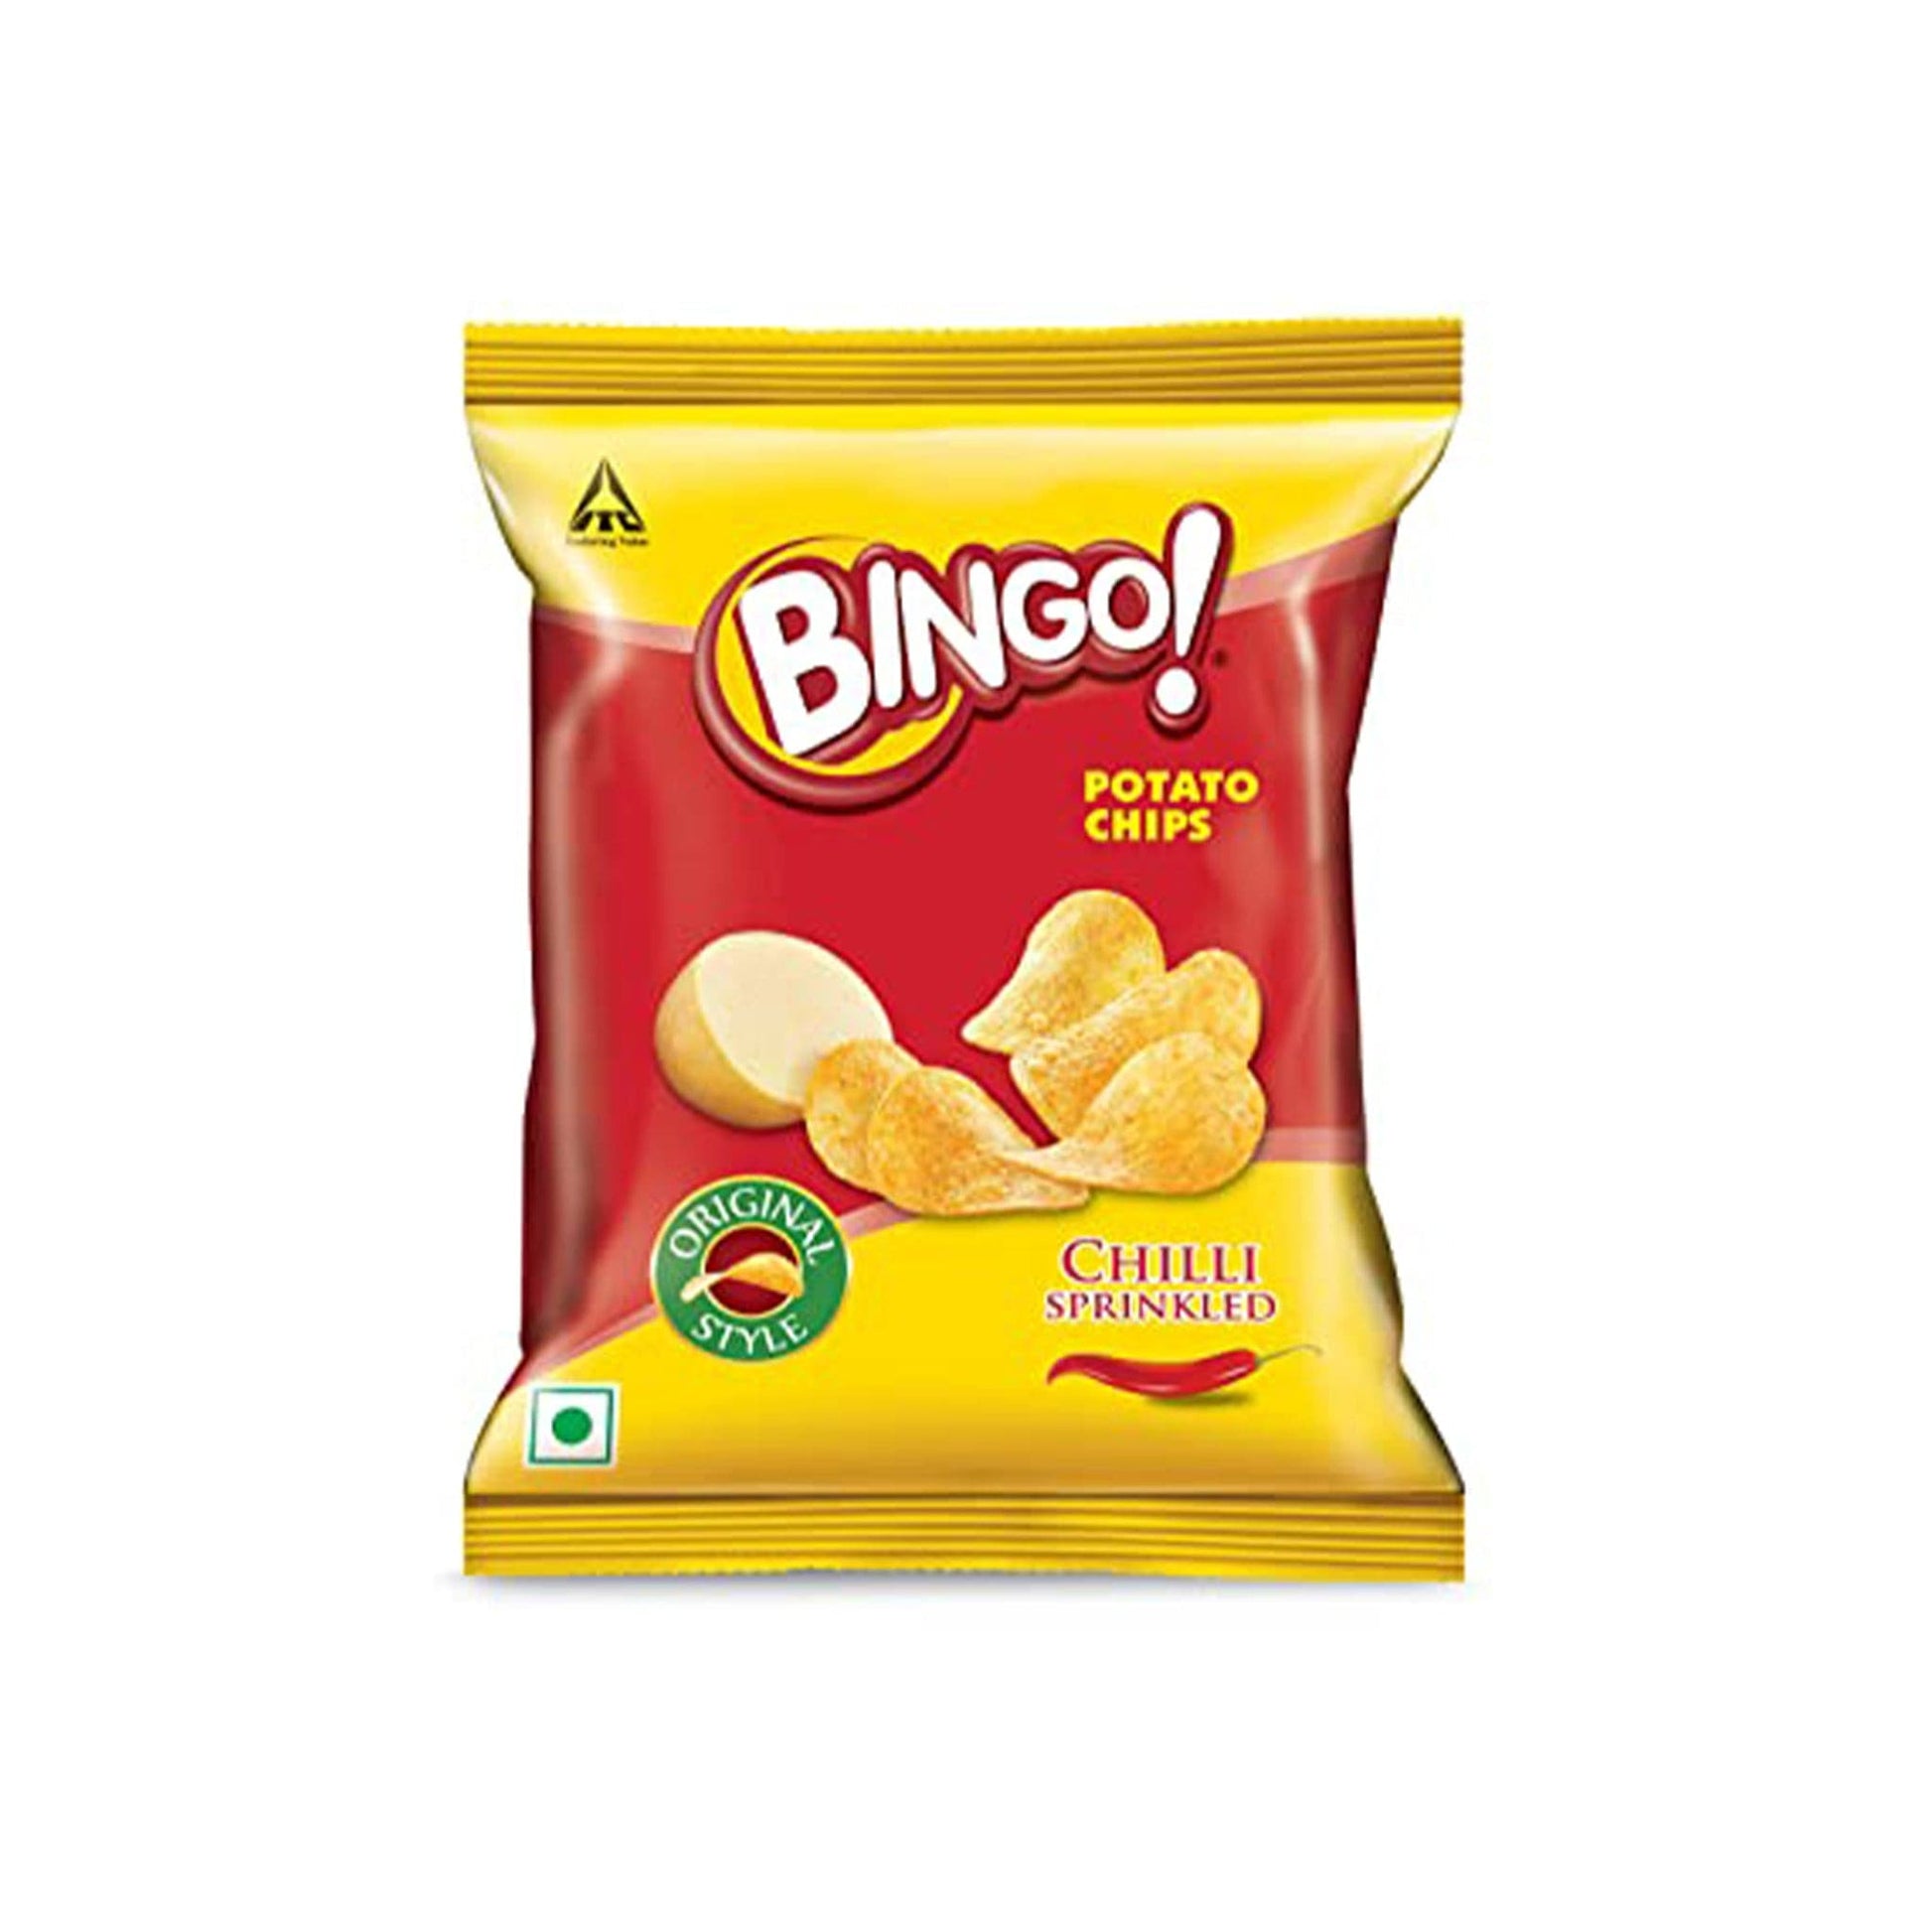 Bingo Original Style Potato Chips-Chilli Sprinkled.